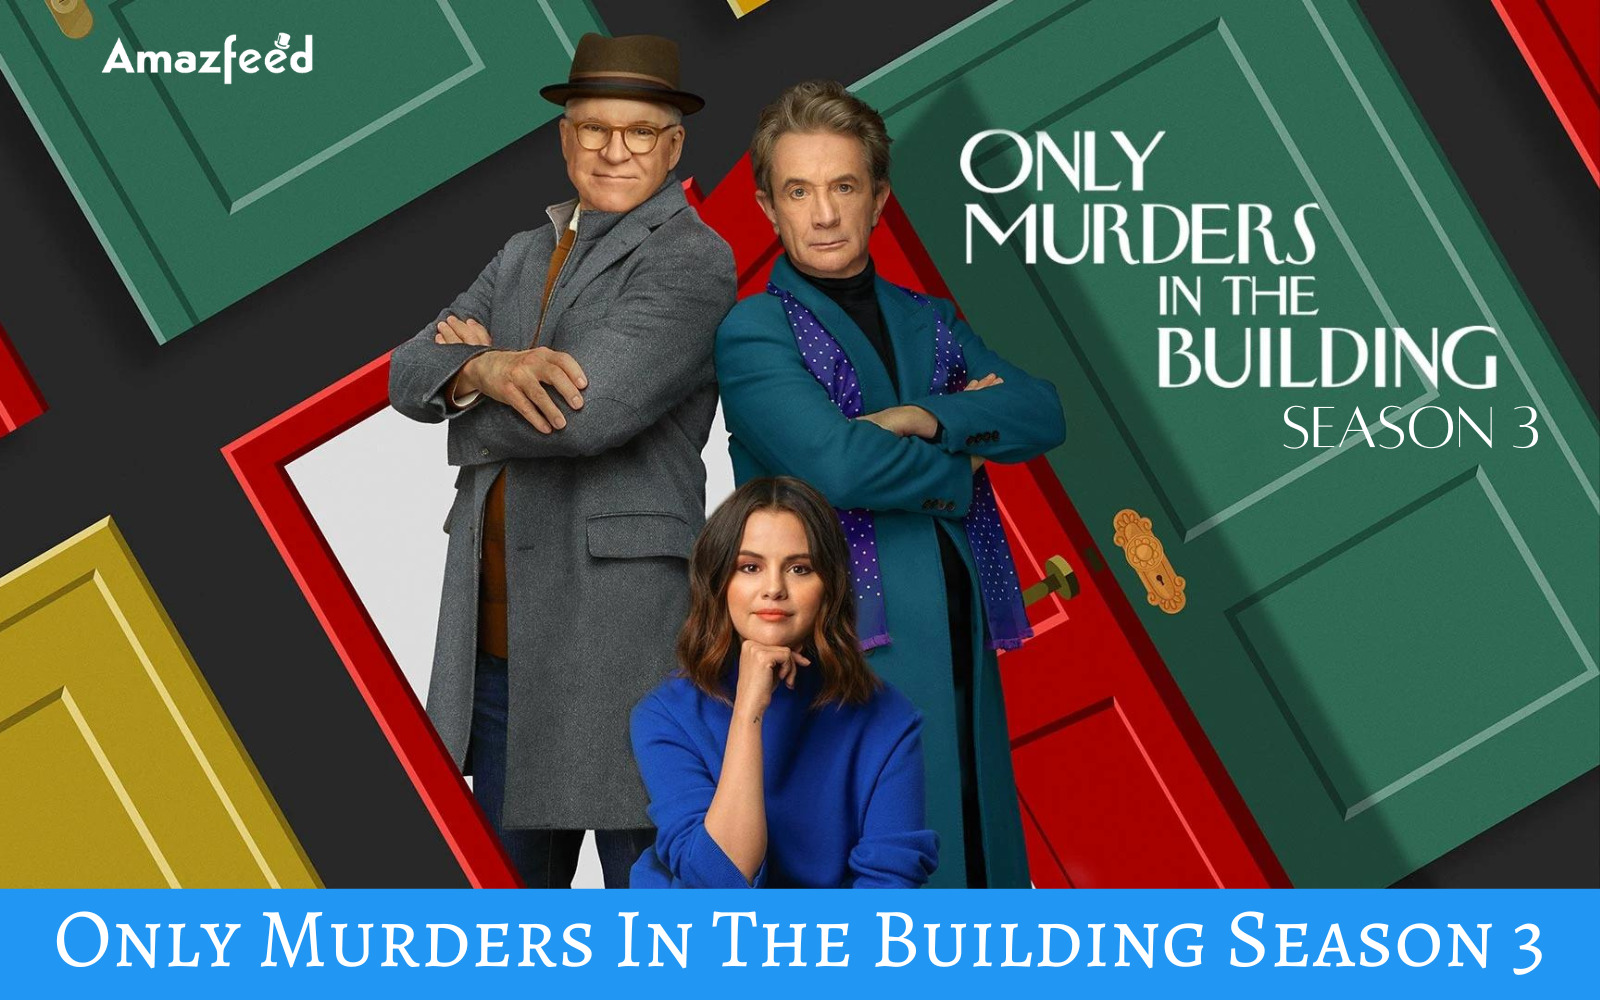 Only Murders In The Building Season 3 Release Date